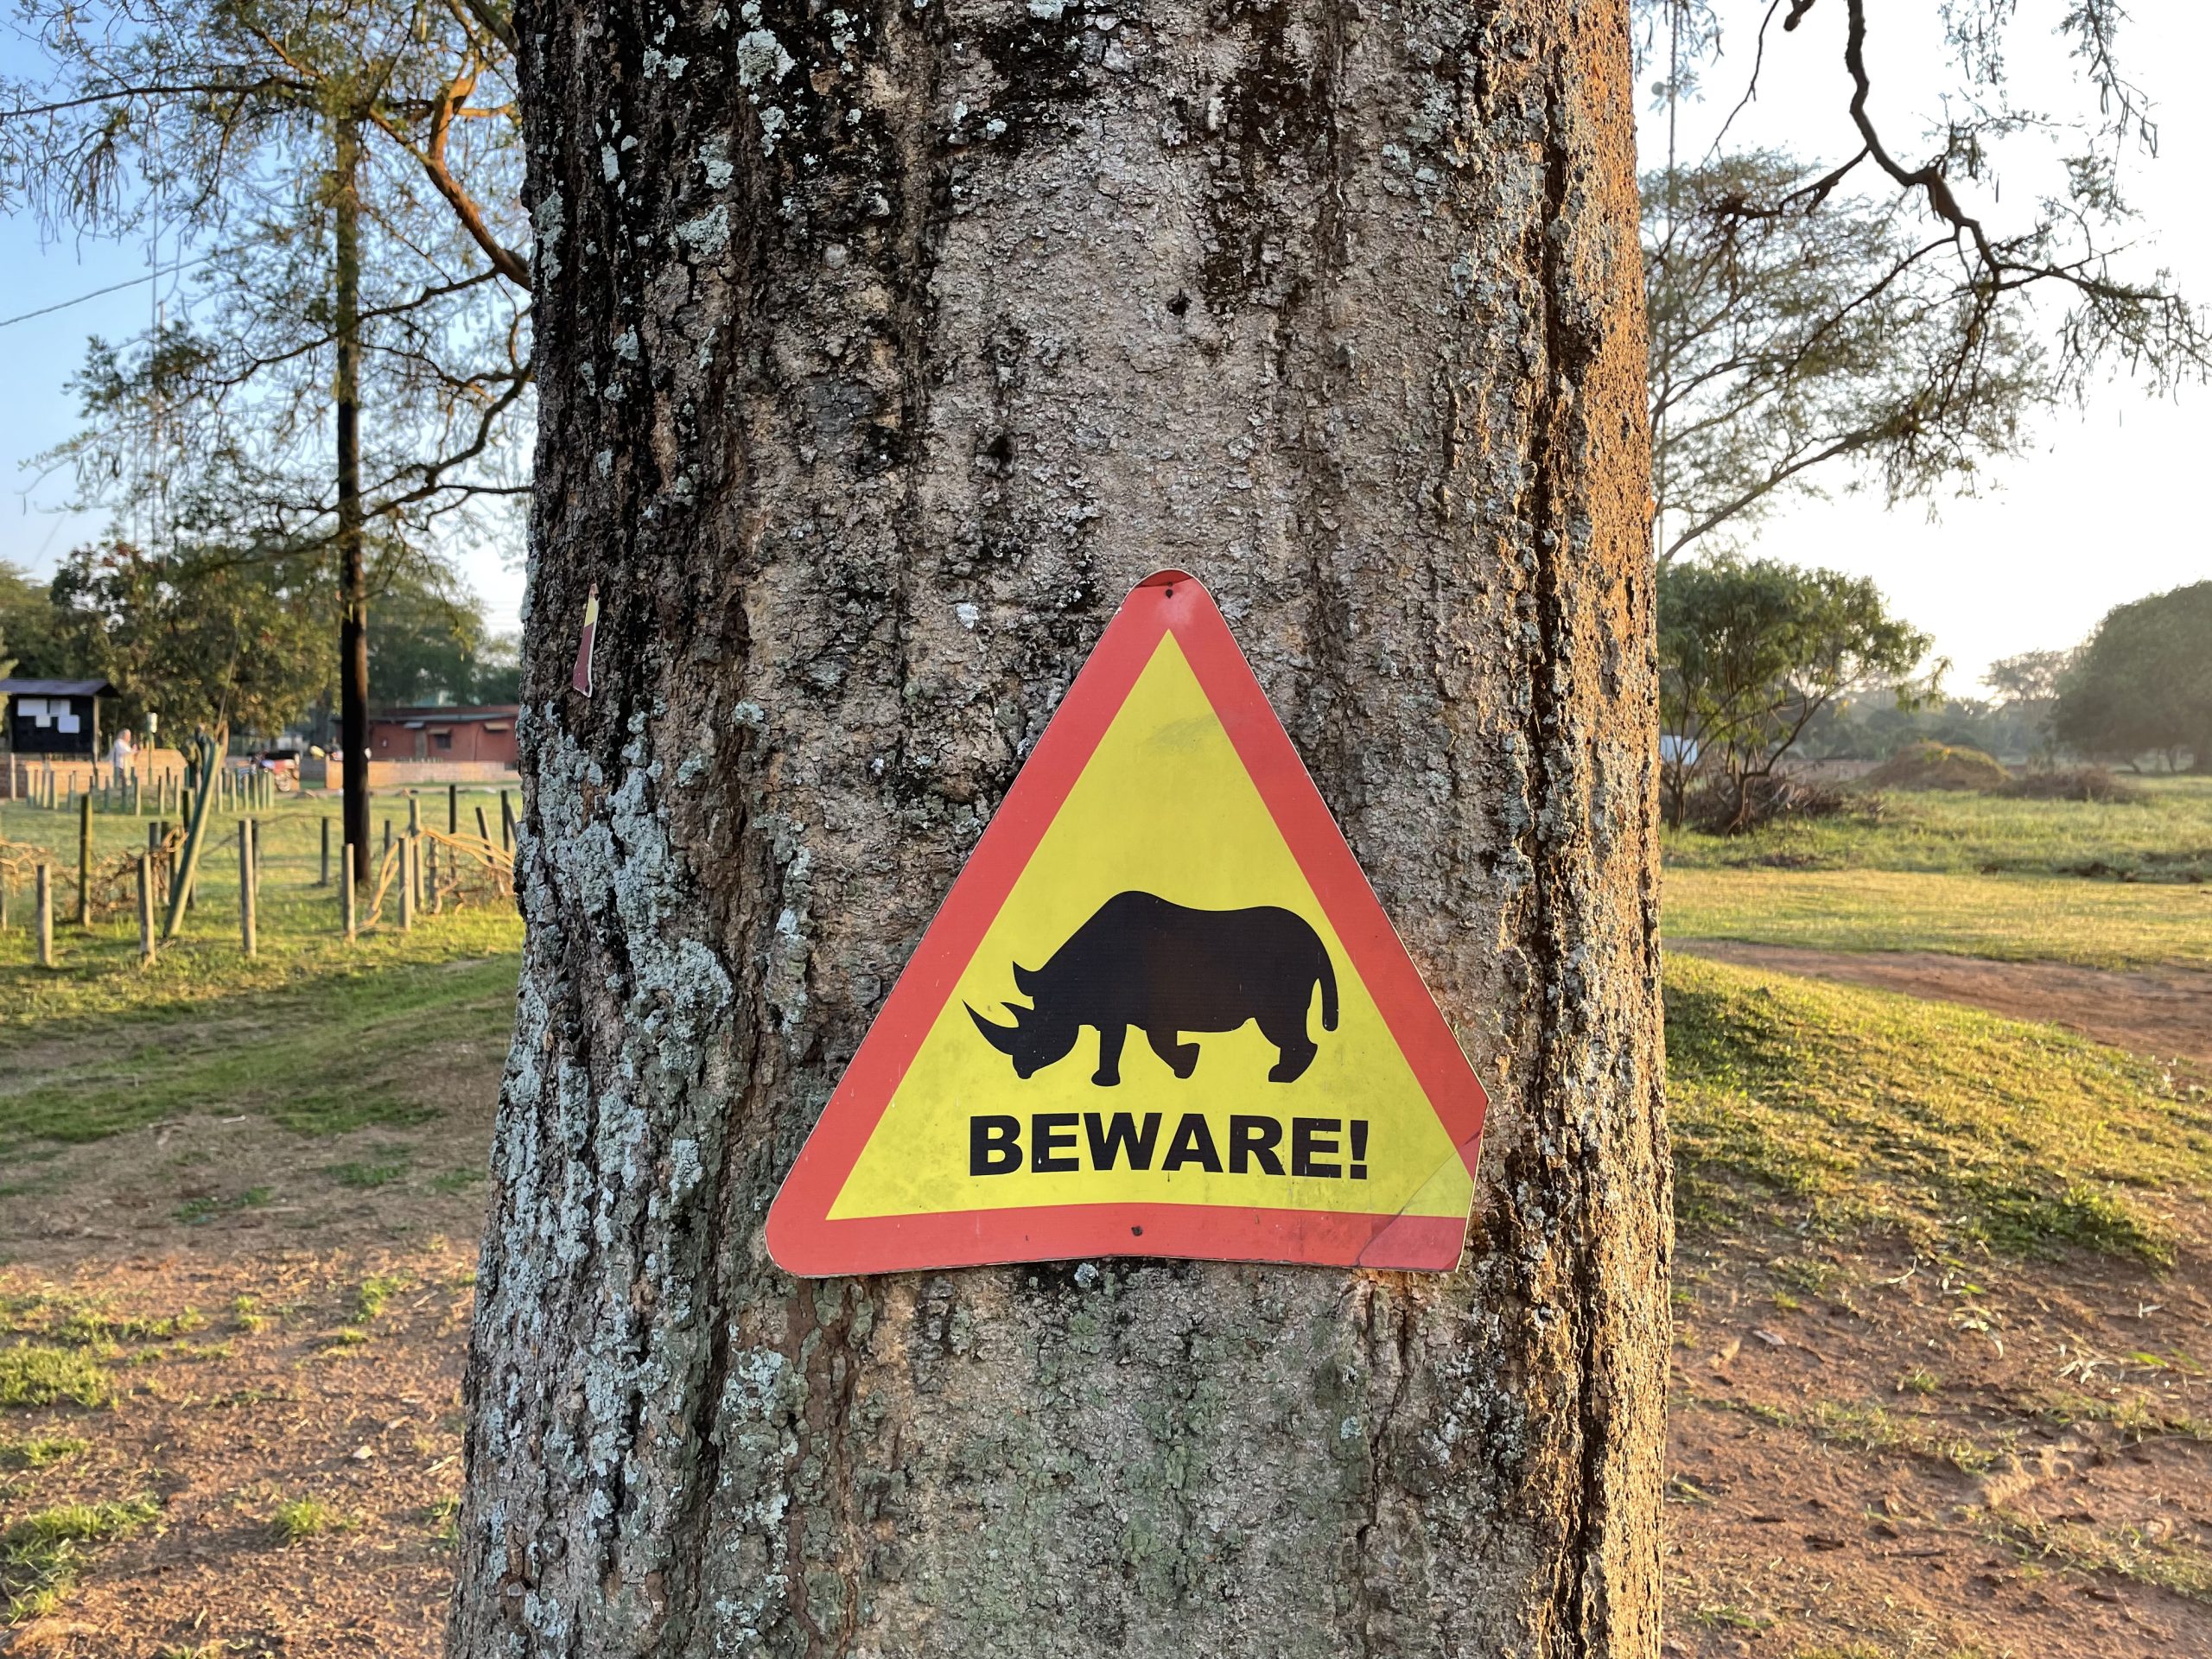 Cuidado com os rinocerontes (Ziwa Rhino Sanctuary)